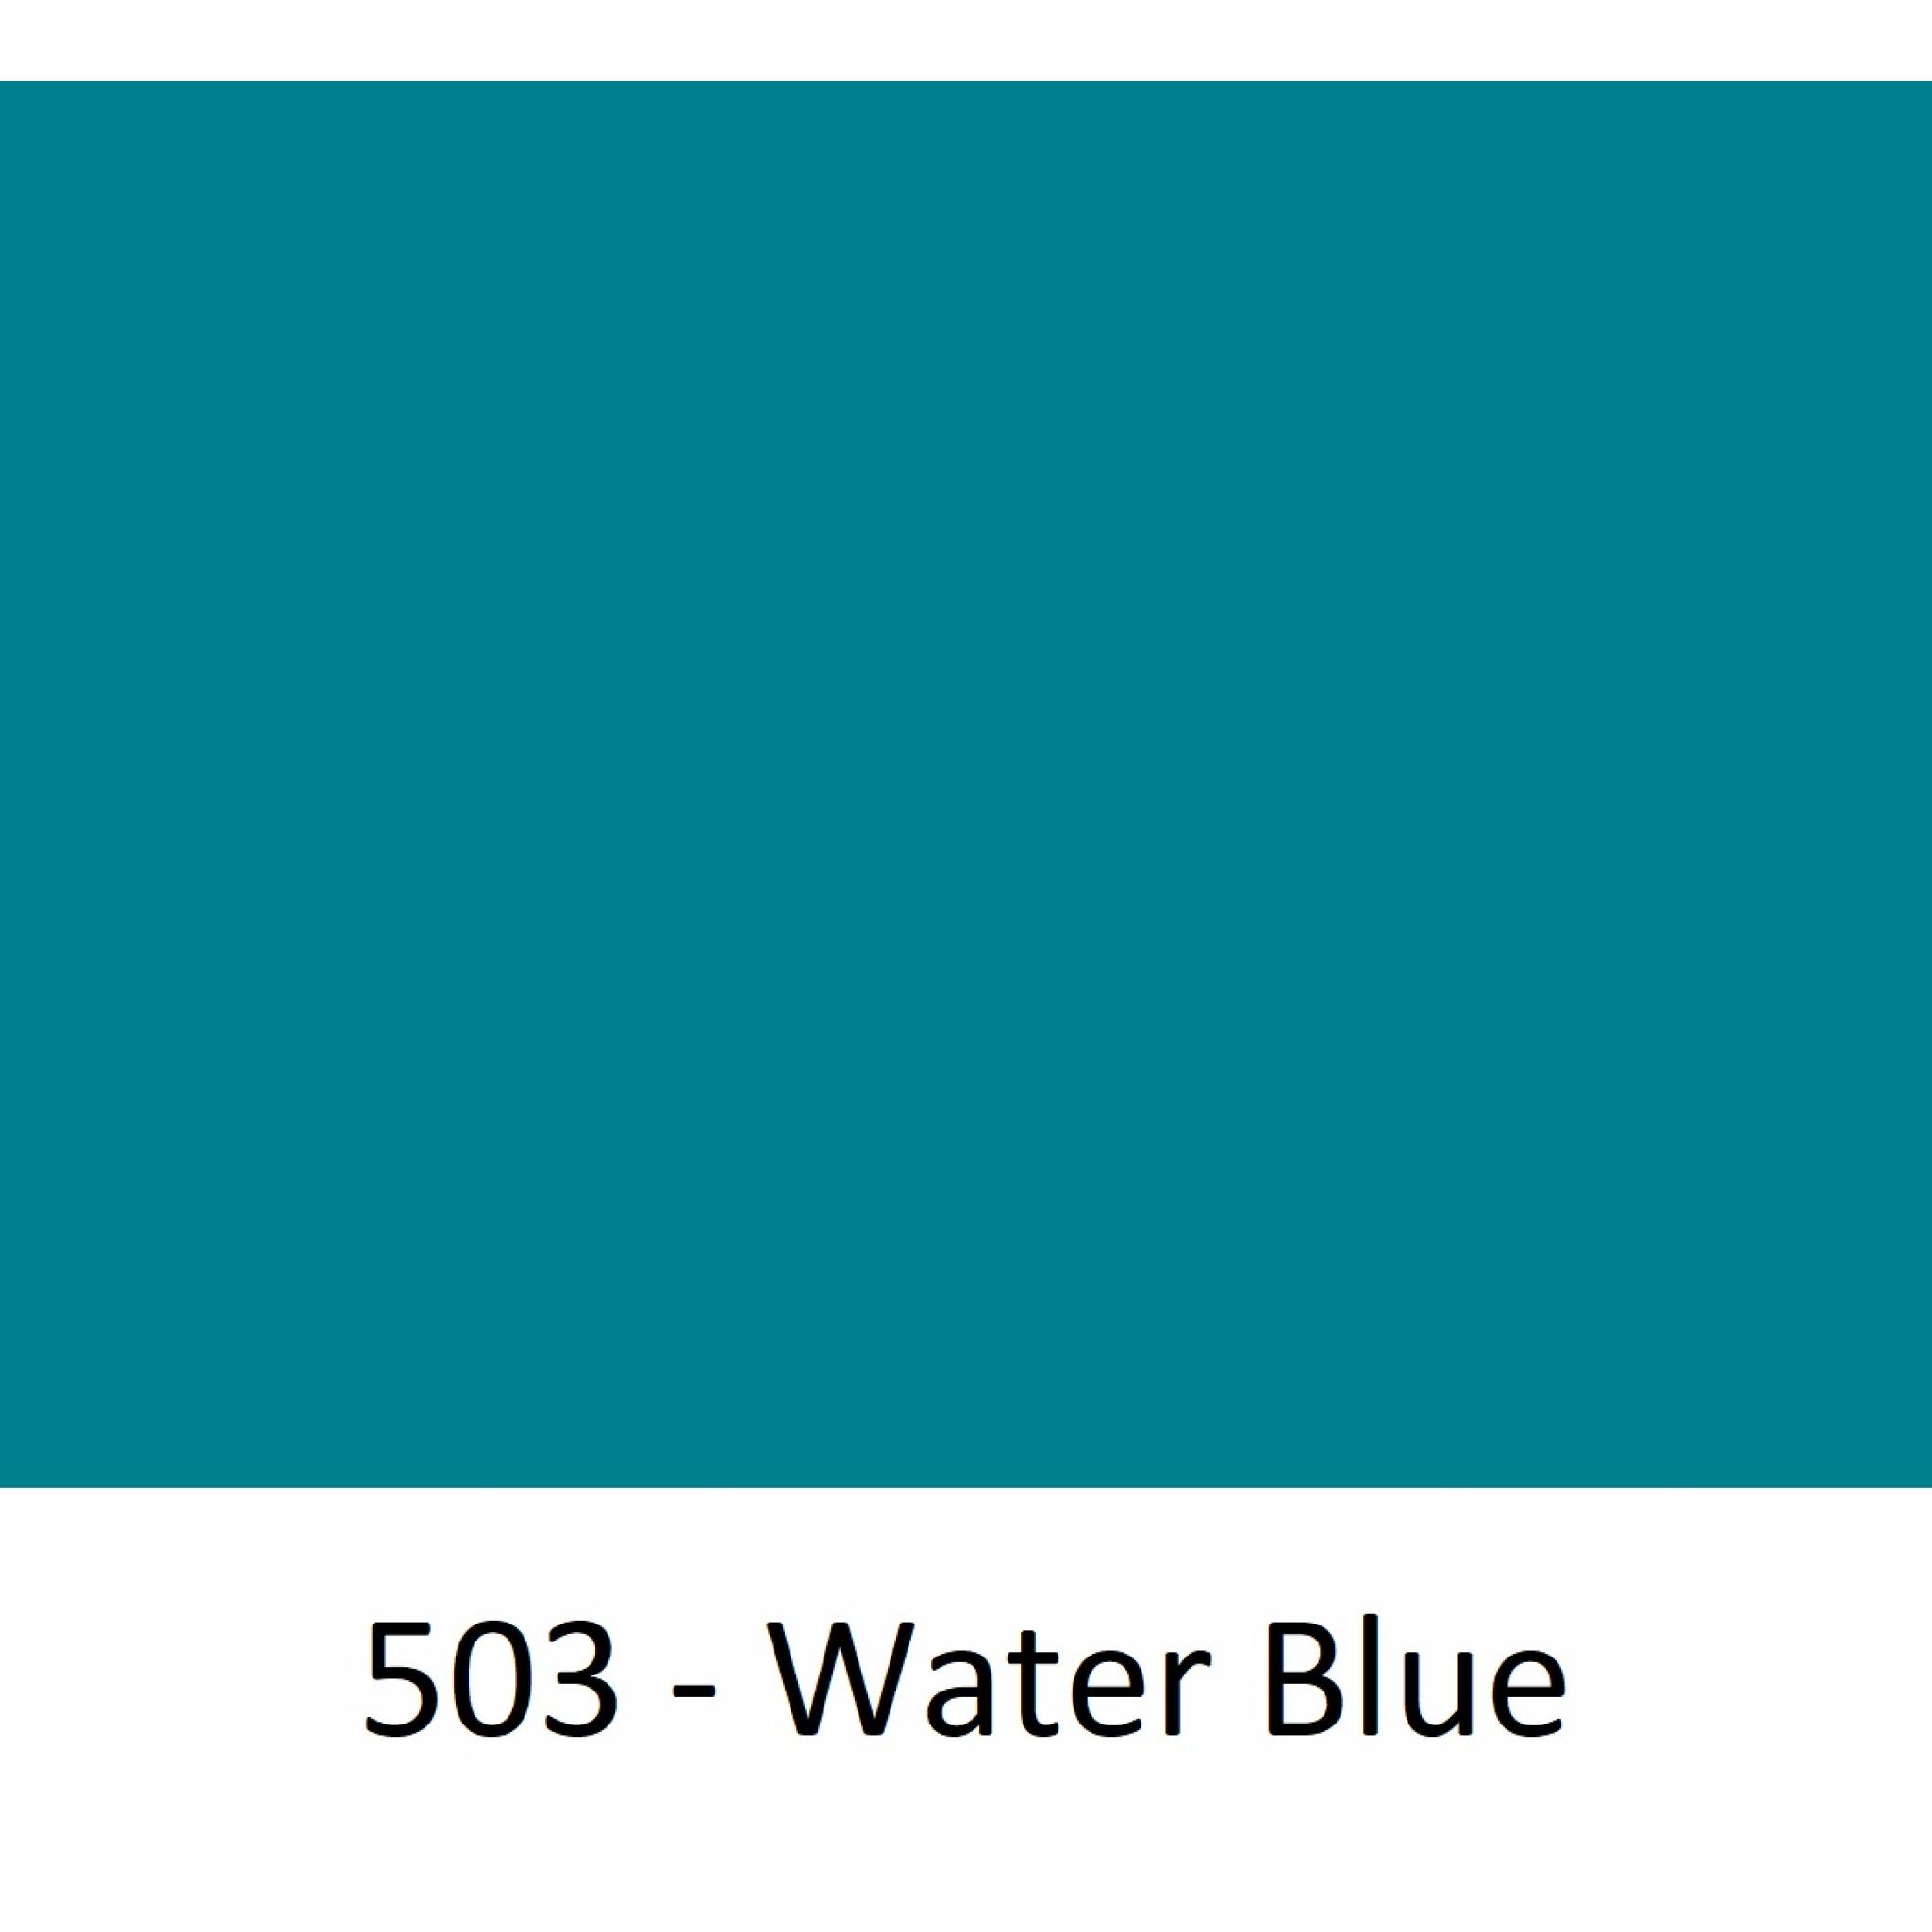 630mm Wide Oracal 551 Series High Performance Cal Vinyl - Water Blue 503